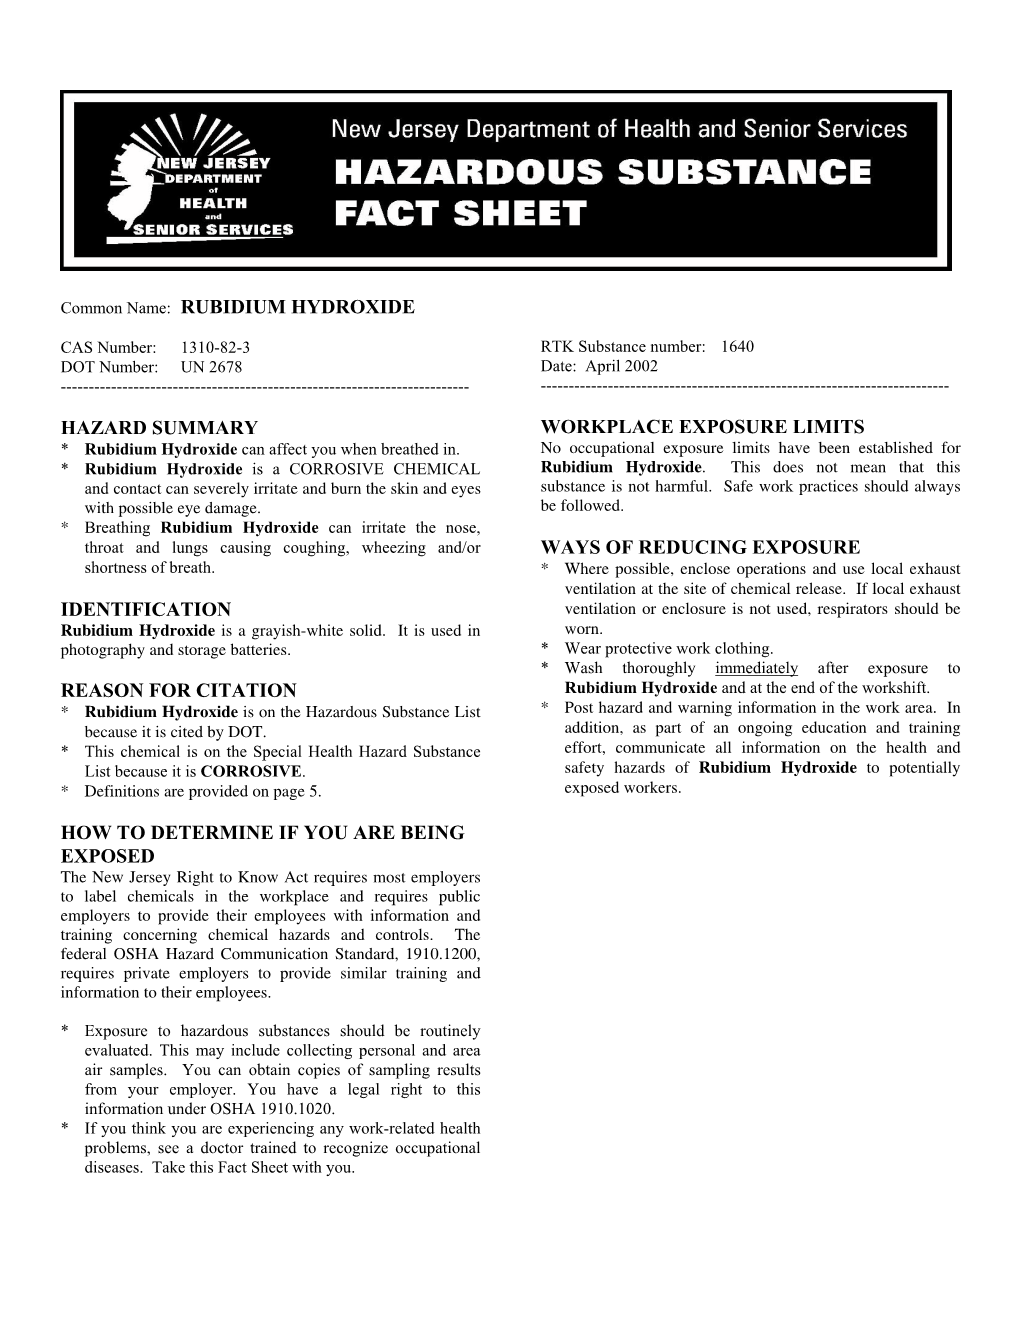 Rubidium Hydroxide Hazard Summary Identification